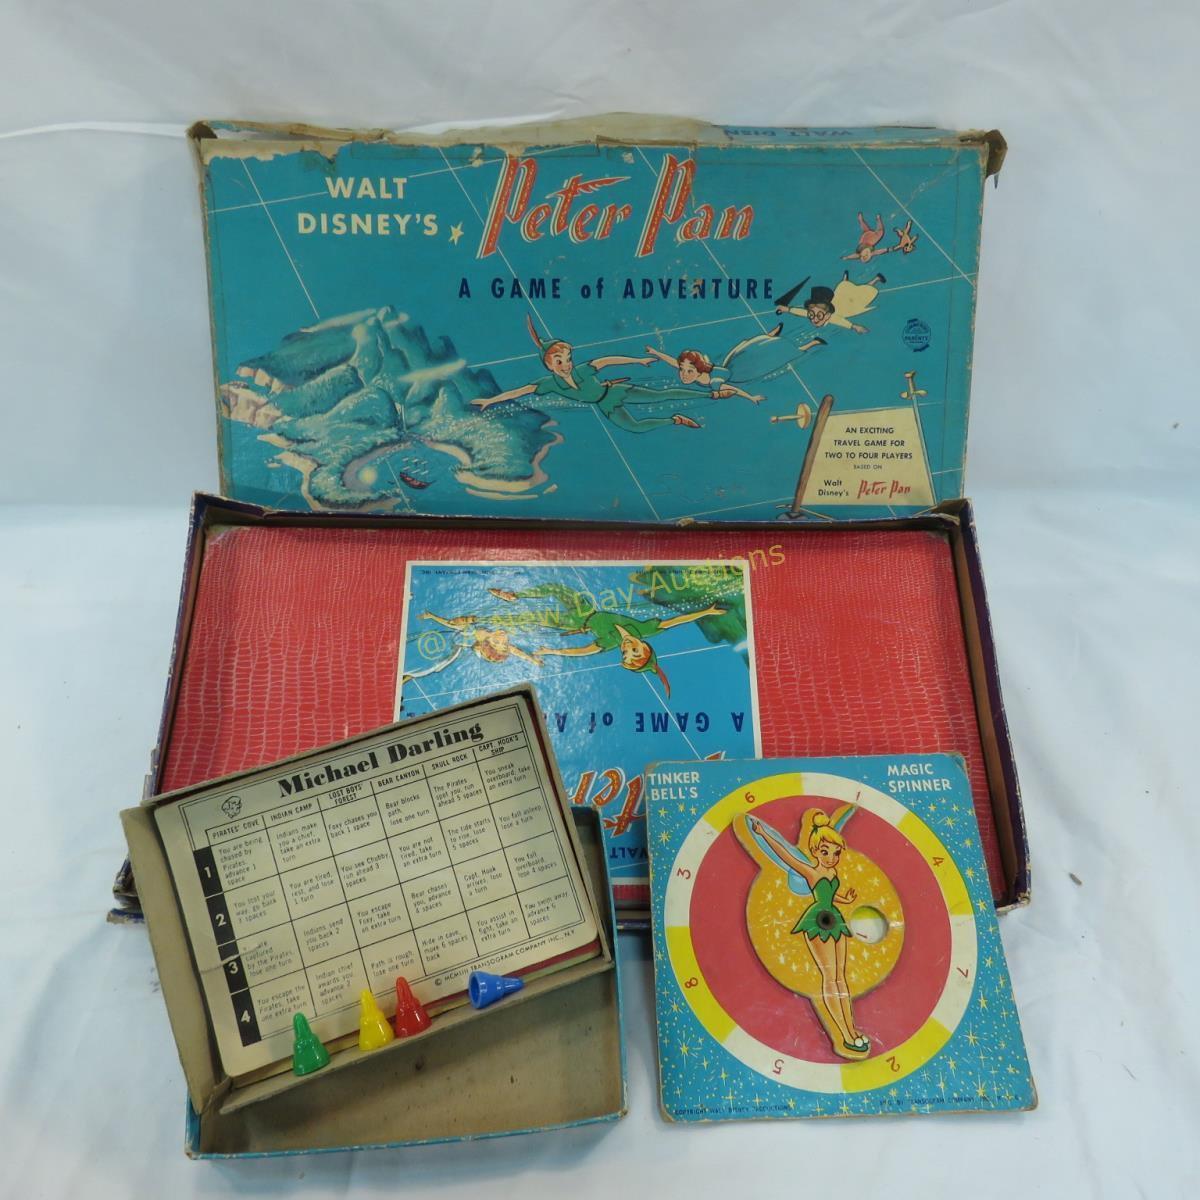 Vintage Board Games, The Smurfs, Peter Pan